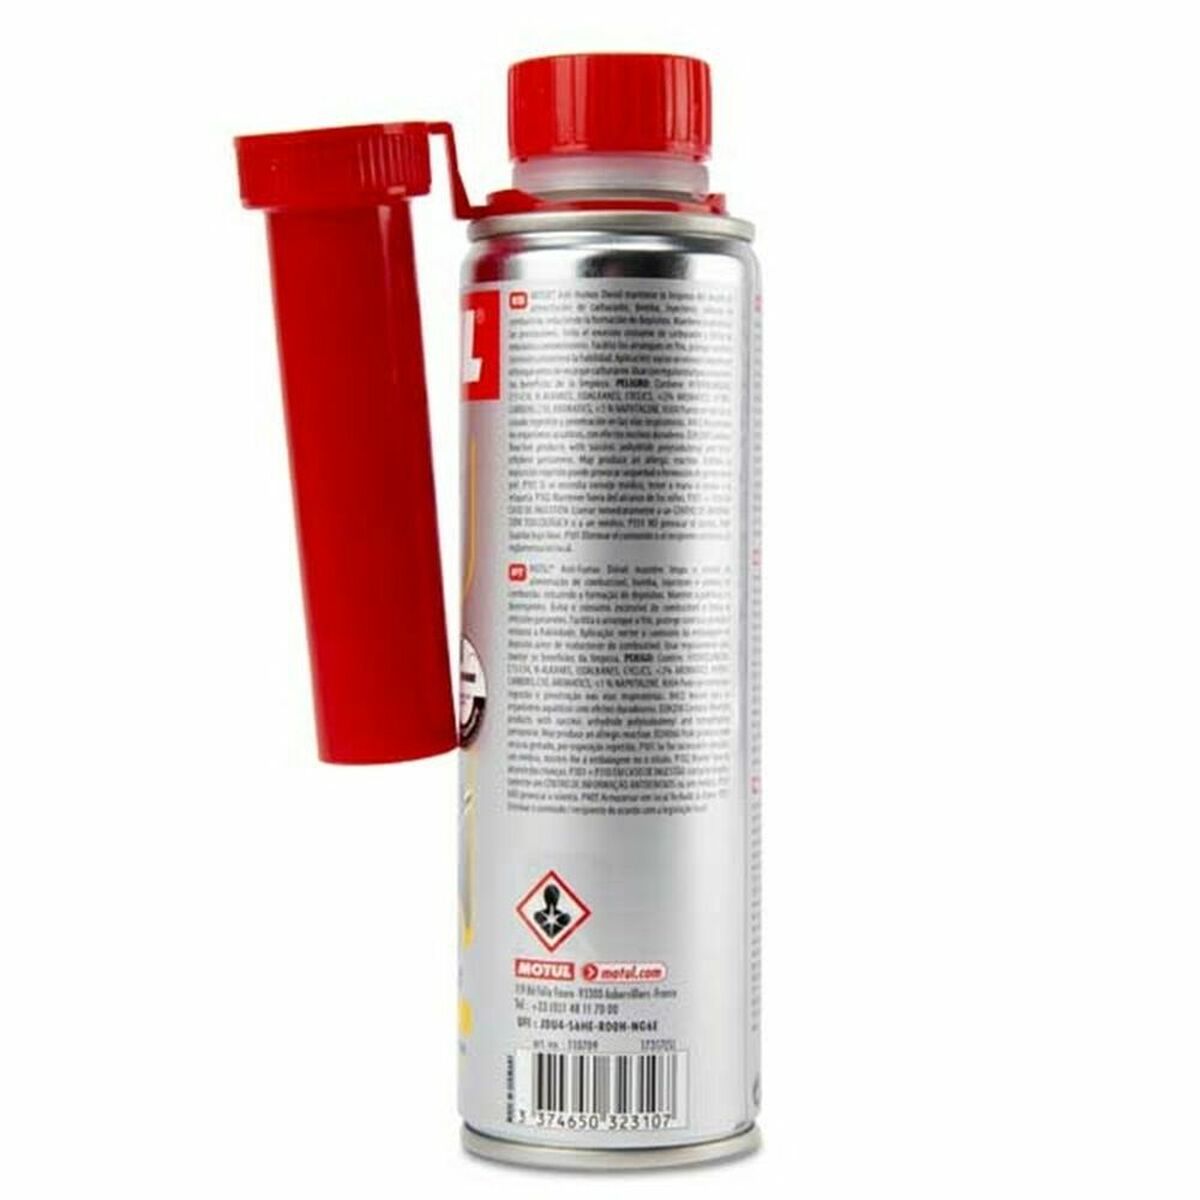 Anti-røg middel til diesel Motul MTL110709 300 ml